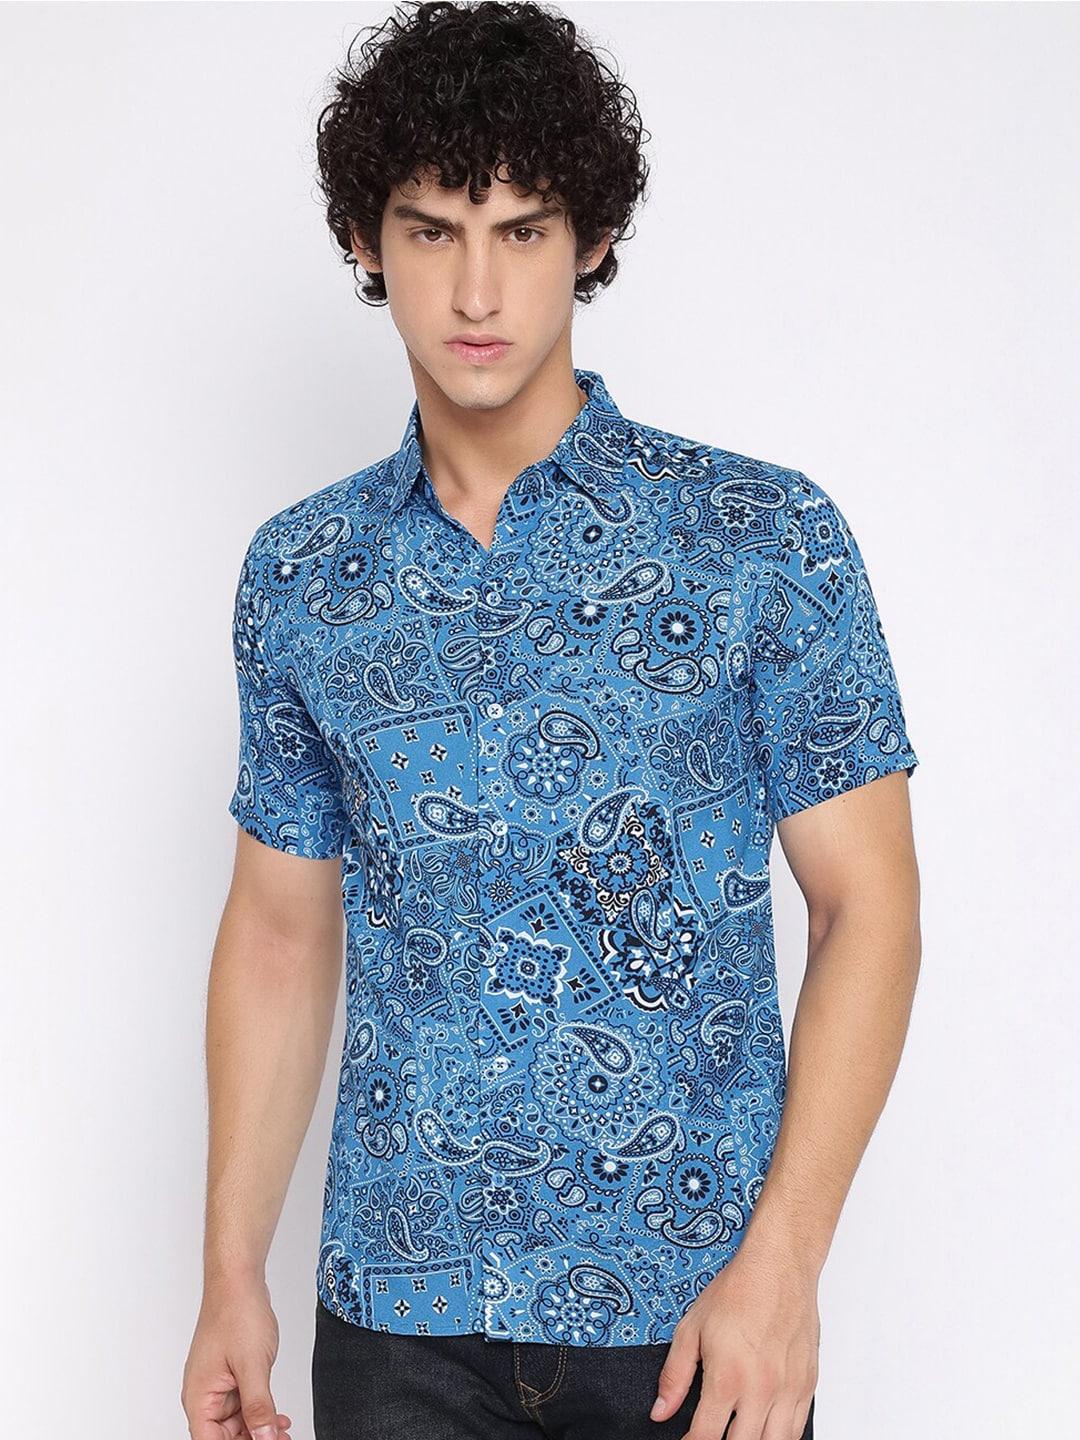 shurtz-n-skurtz-relaxed-ethnic-motifs-printed-regular-fit-cotton-casual-shirt